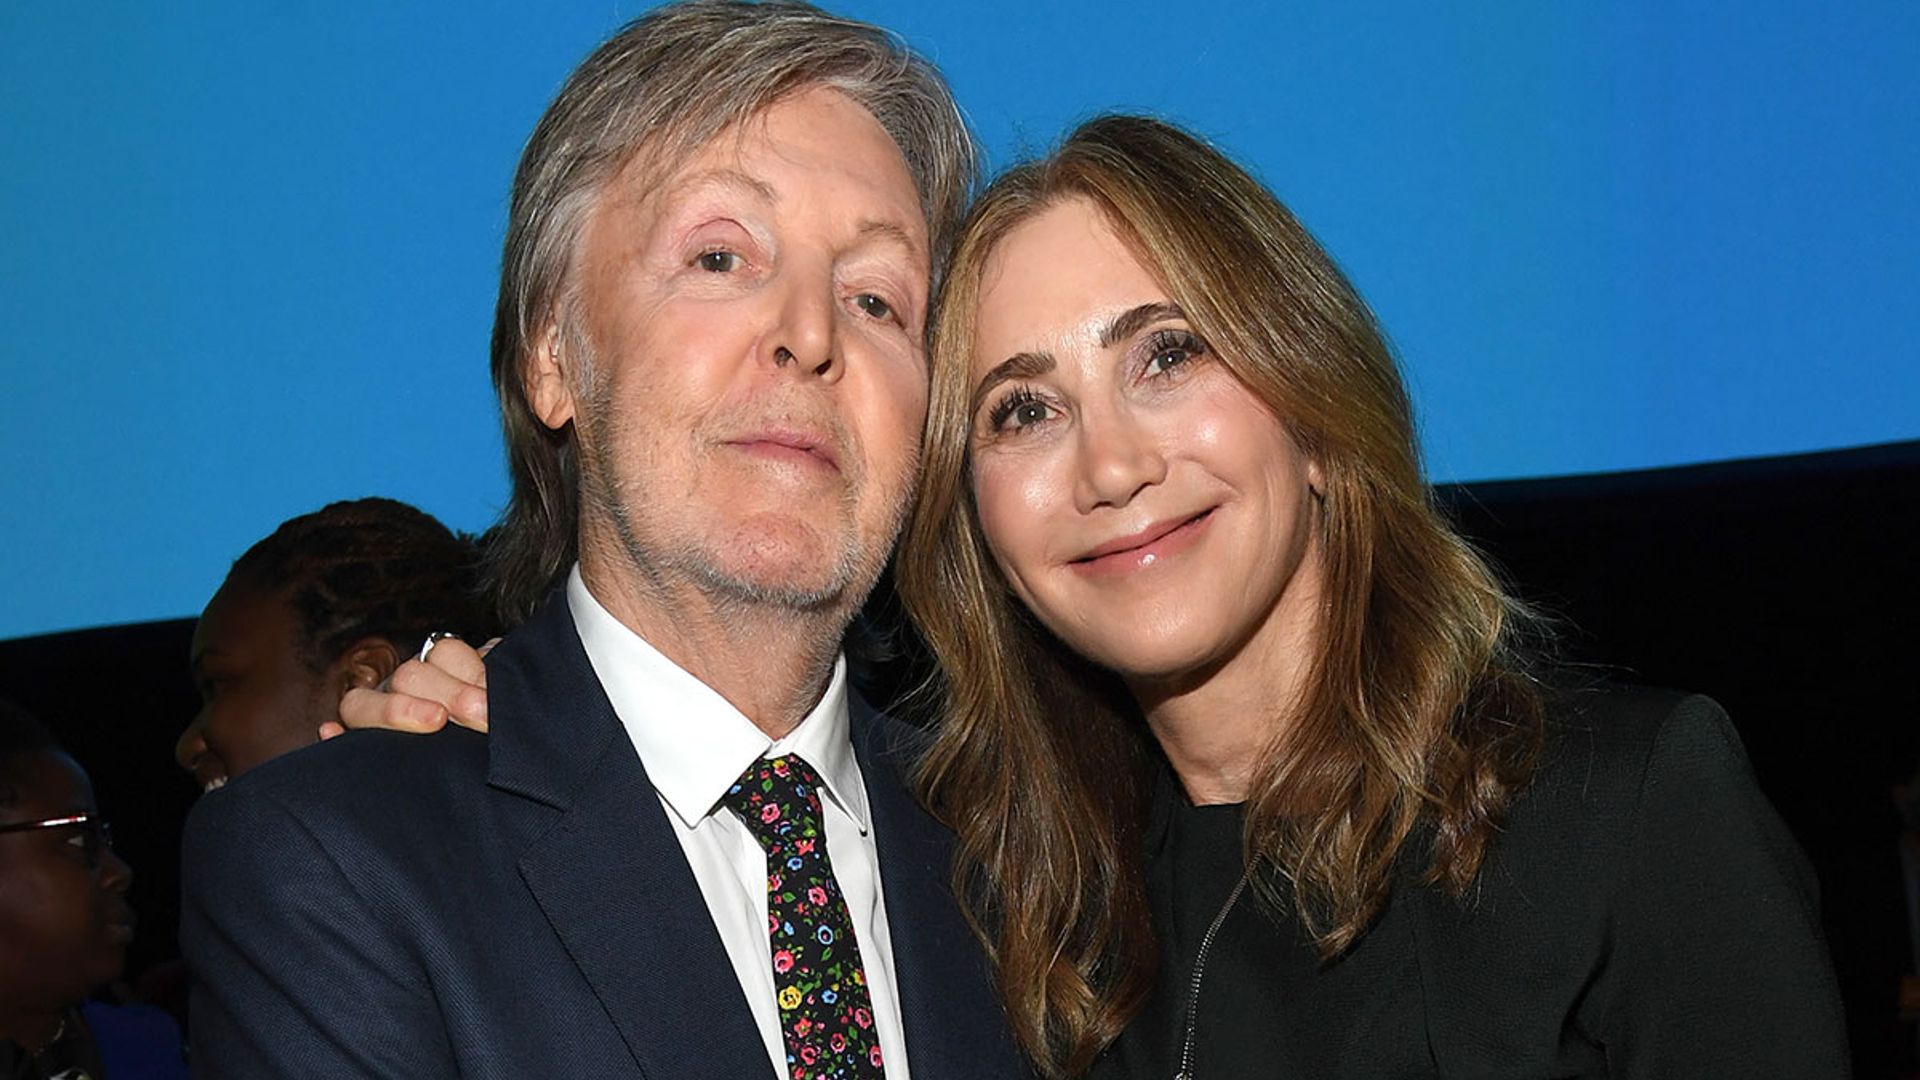 Sir Paul McCartney's wife Nancy Shevell stuns in figure-hugging dress on rare date night